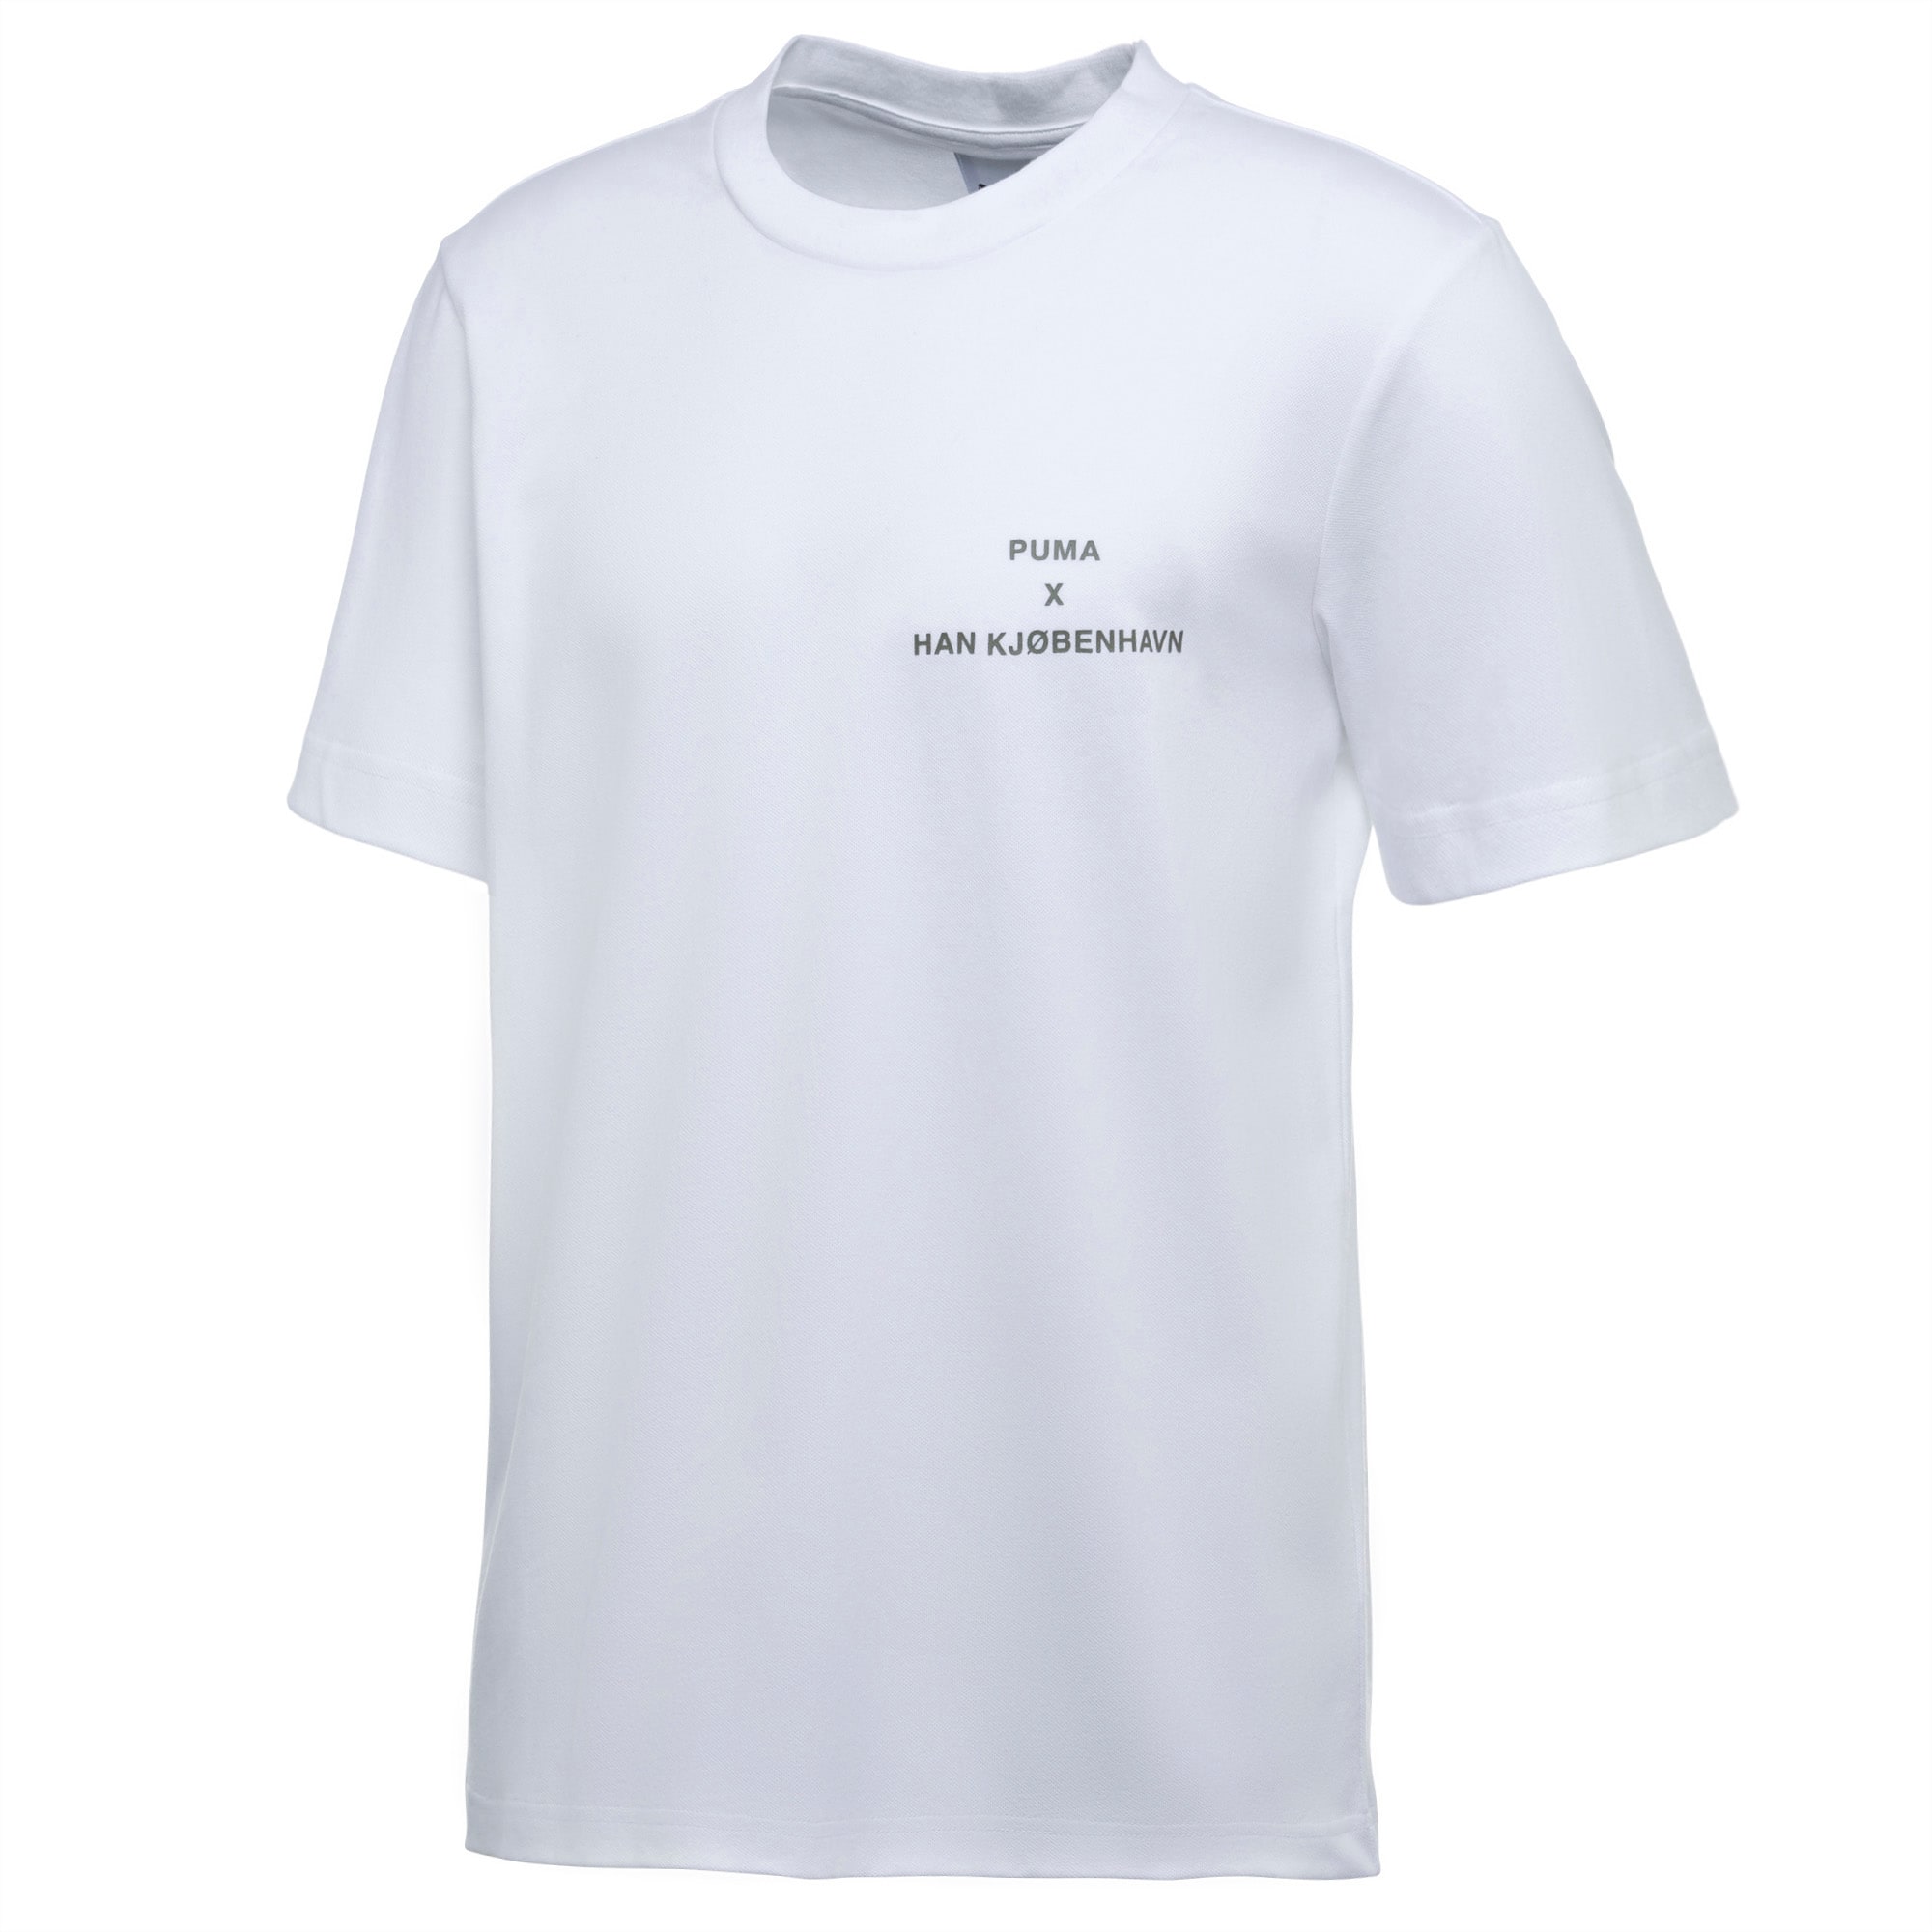 PUMA x HAN KJØBENHAVN Men's T-Shirt 